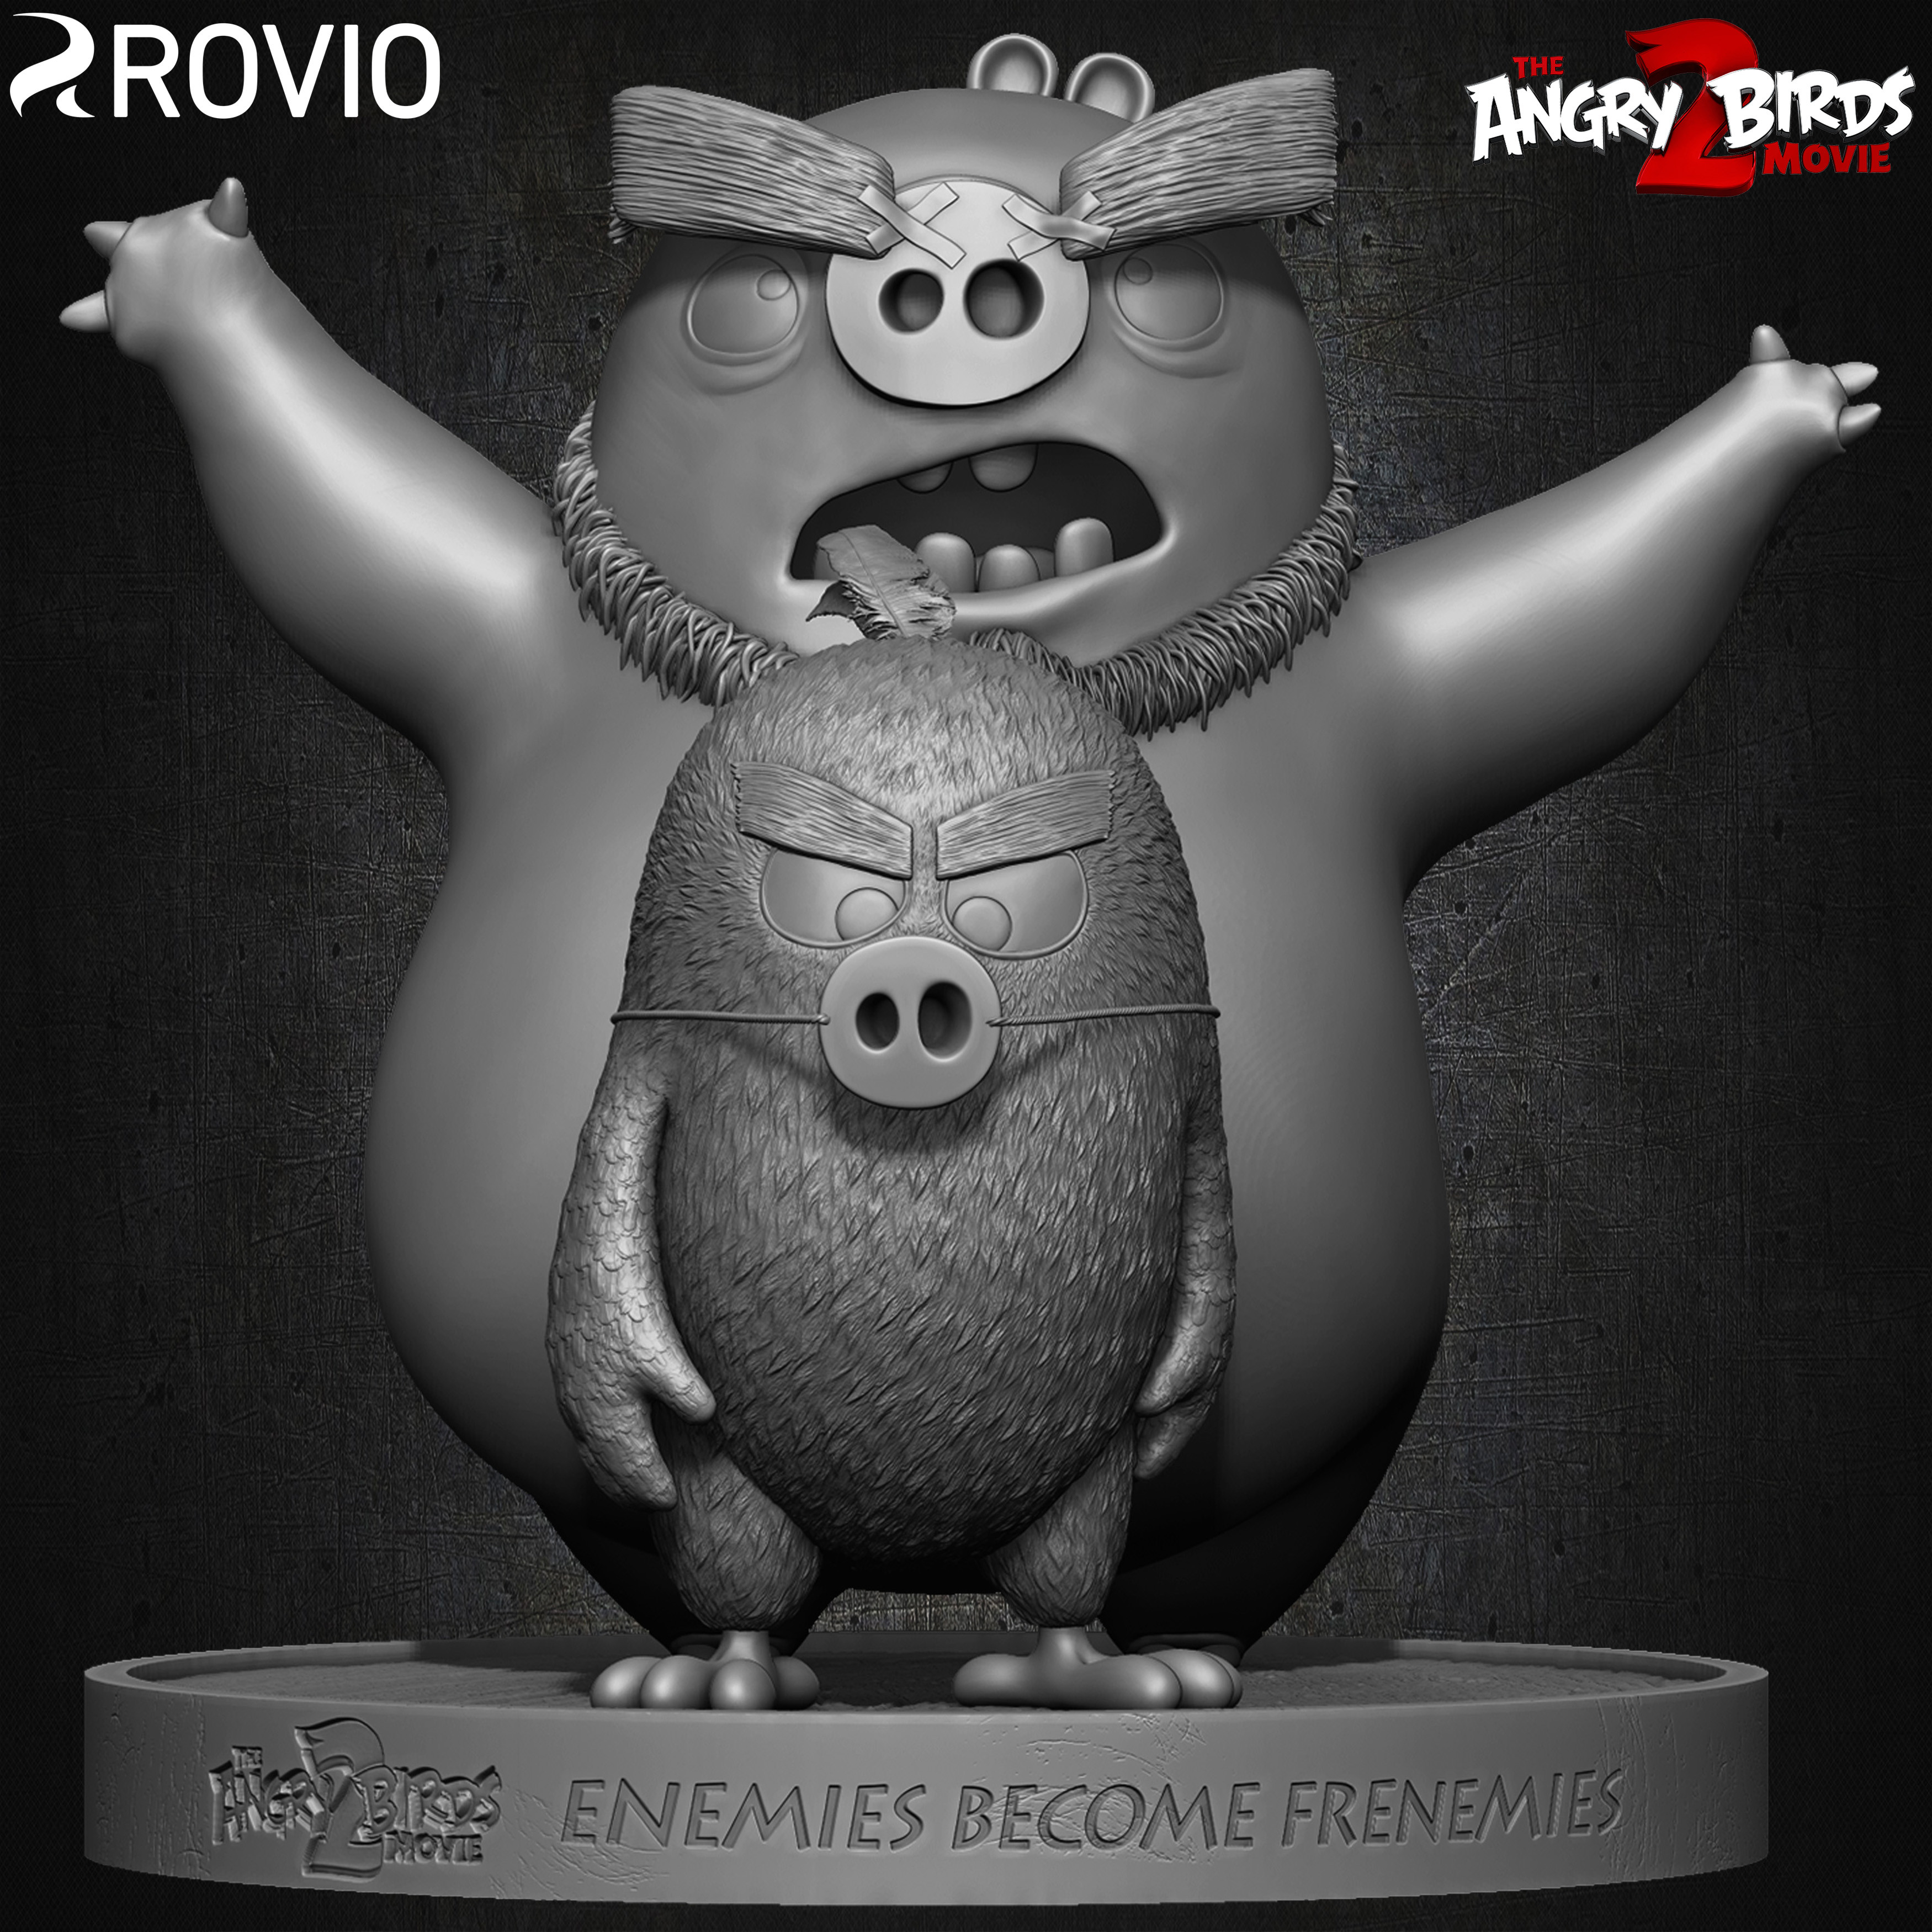 Red and Leonard Diorama Angry Birds movie 02 Rovio Entertainment sculpted by Yacine BRINIS 001